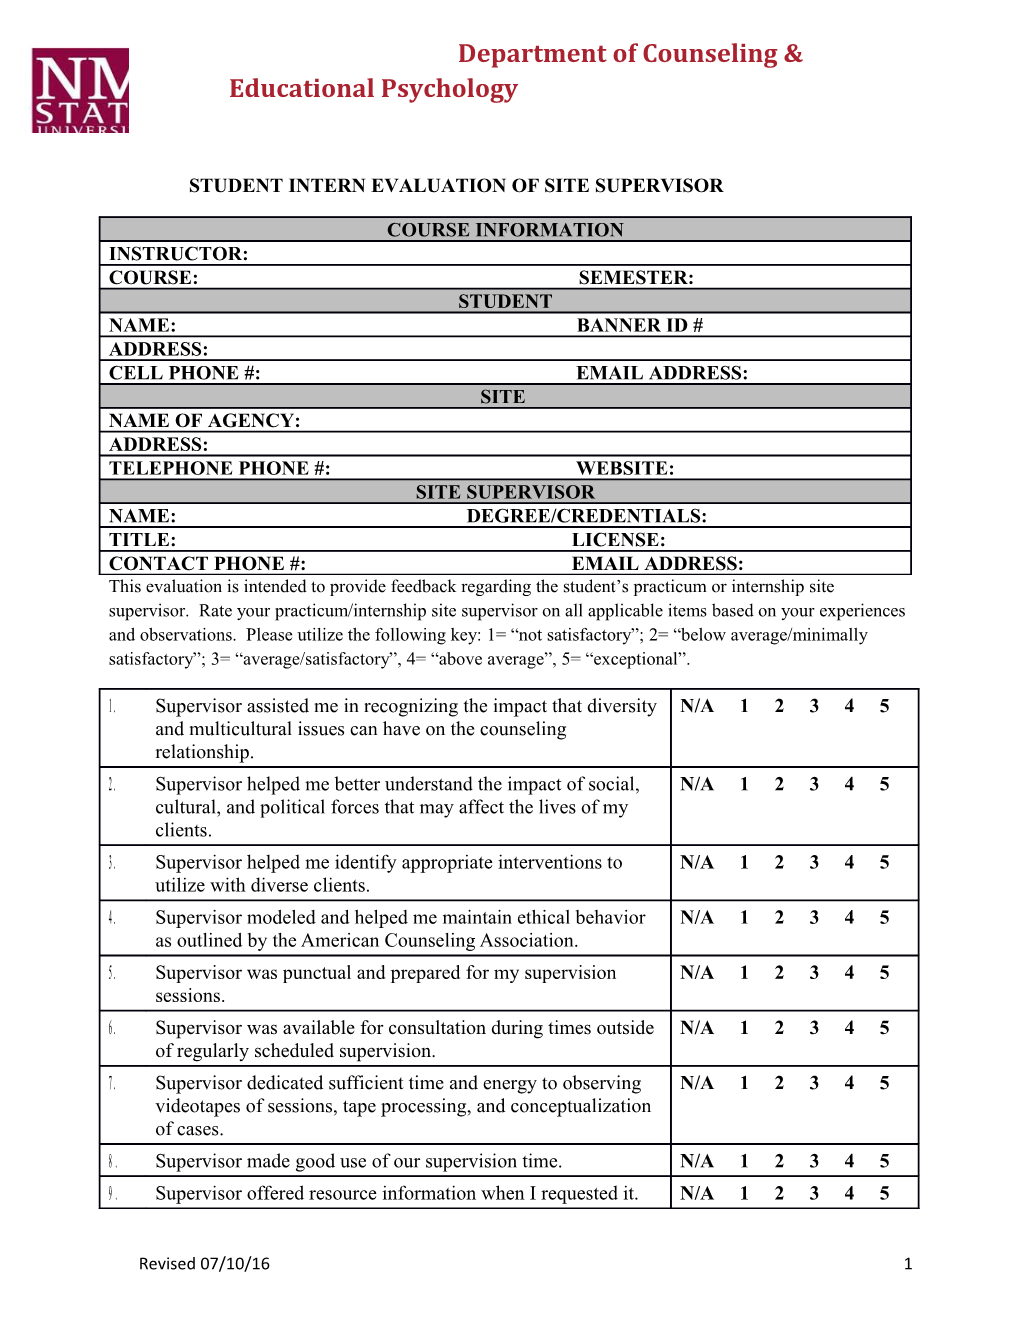 Student Intern Evaluation of Site Supervisor